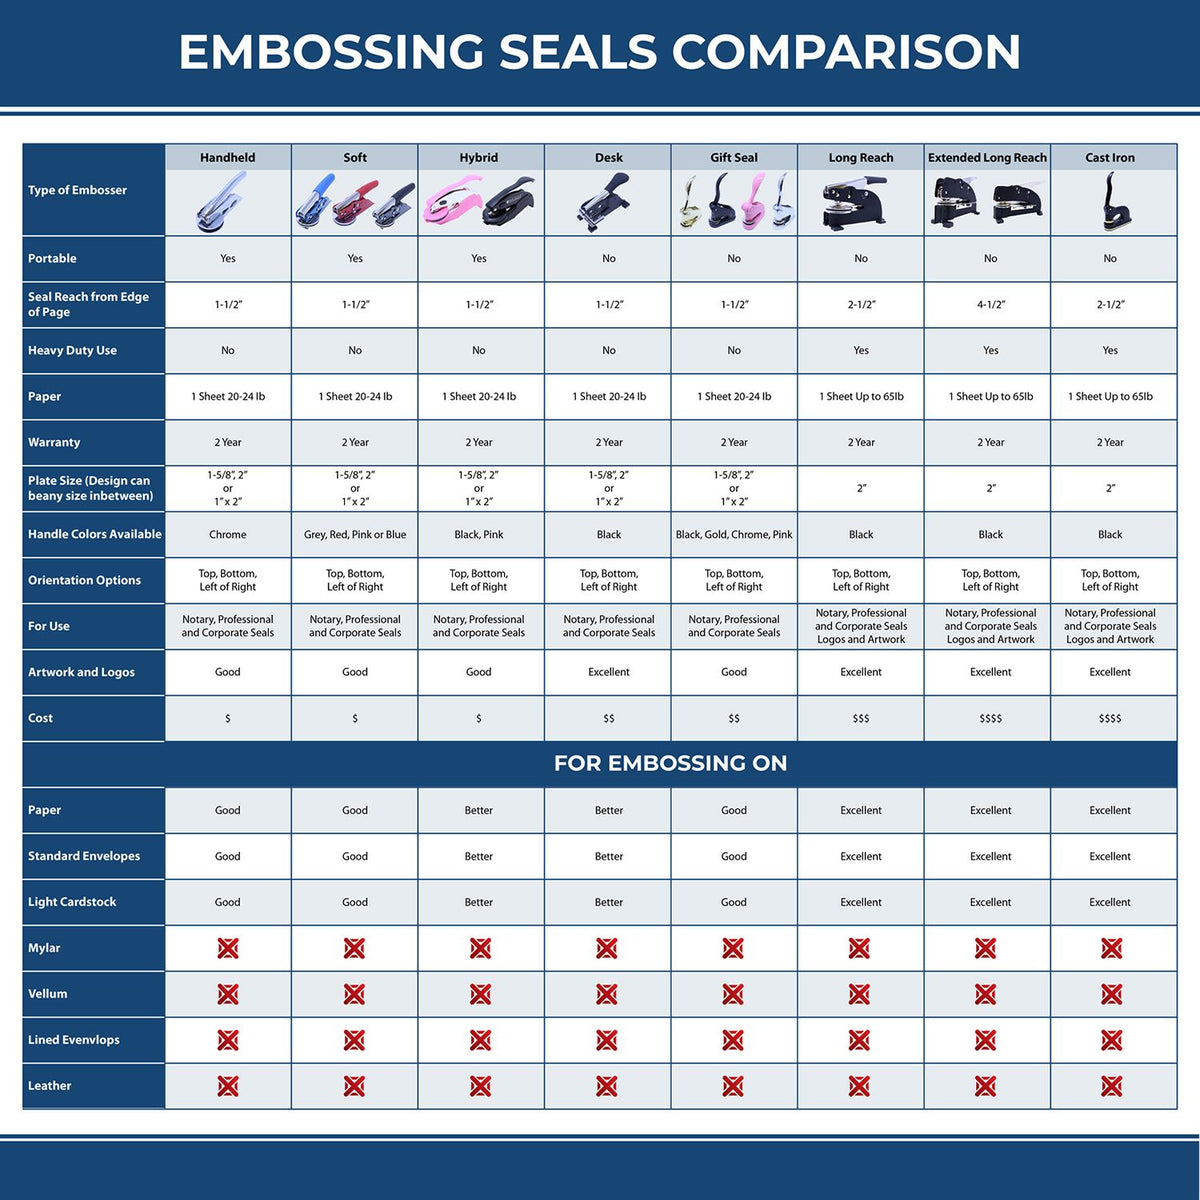 Real Estate Appraiser Long Reach Desk Seal Embosser 3022REA Embossing Seal Comparison